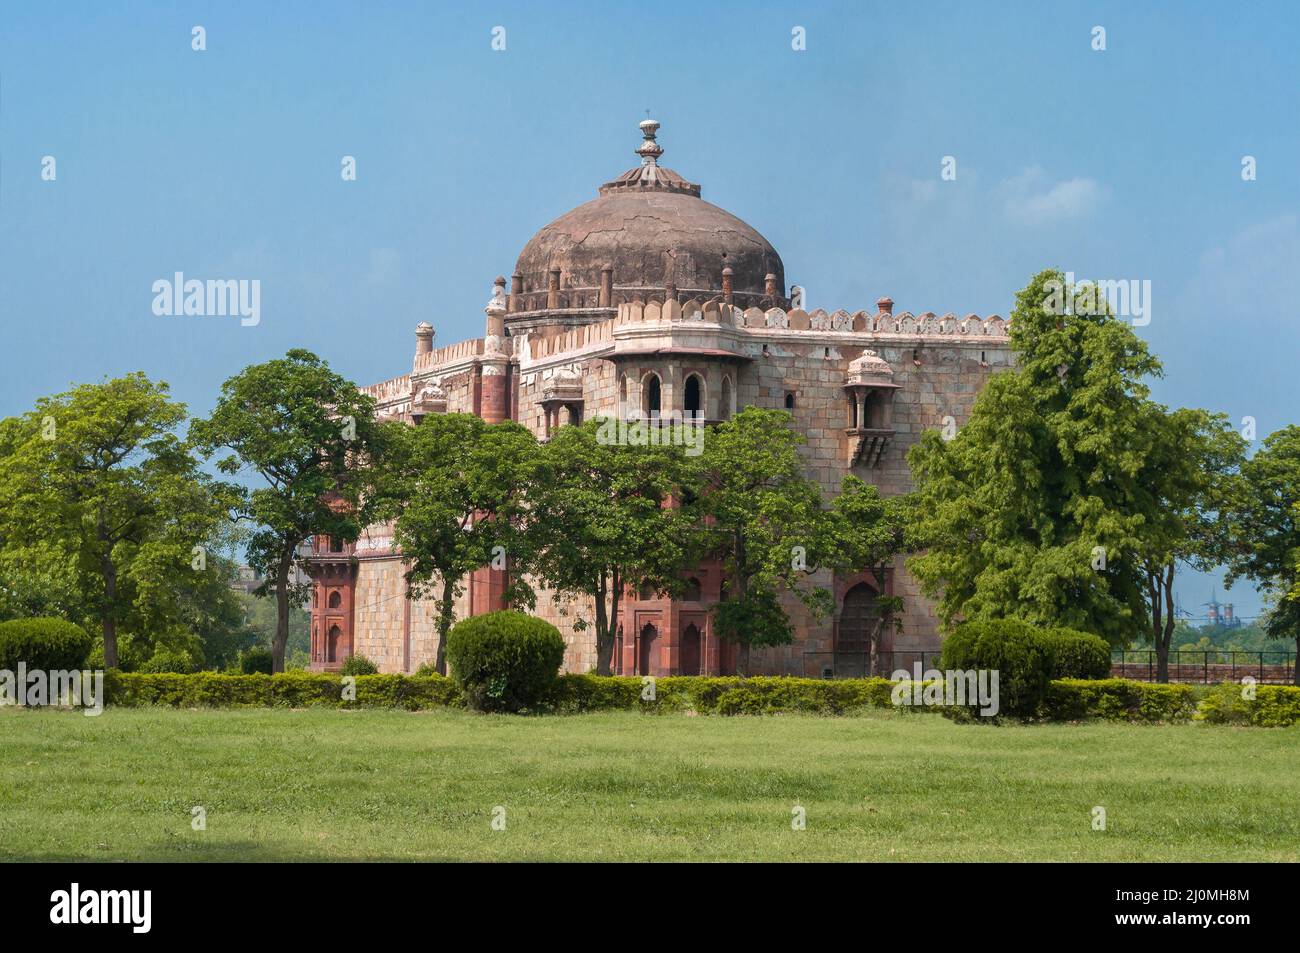 L'ancienne mosquée de Bada Gumbad dans le parc Lodi. New Delhi, Inde Banque D'Images